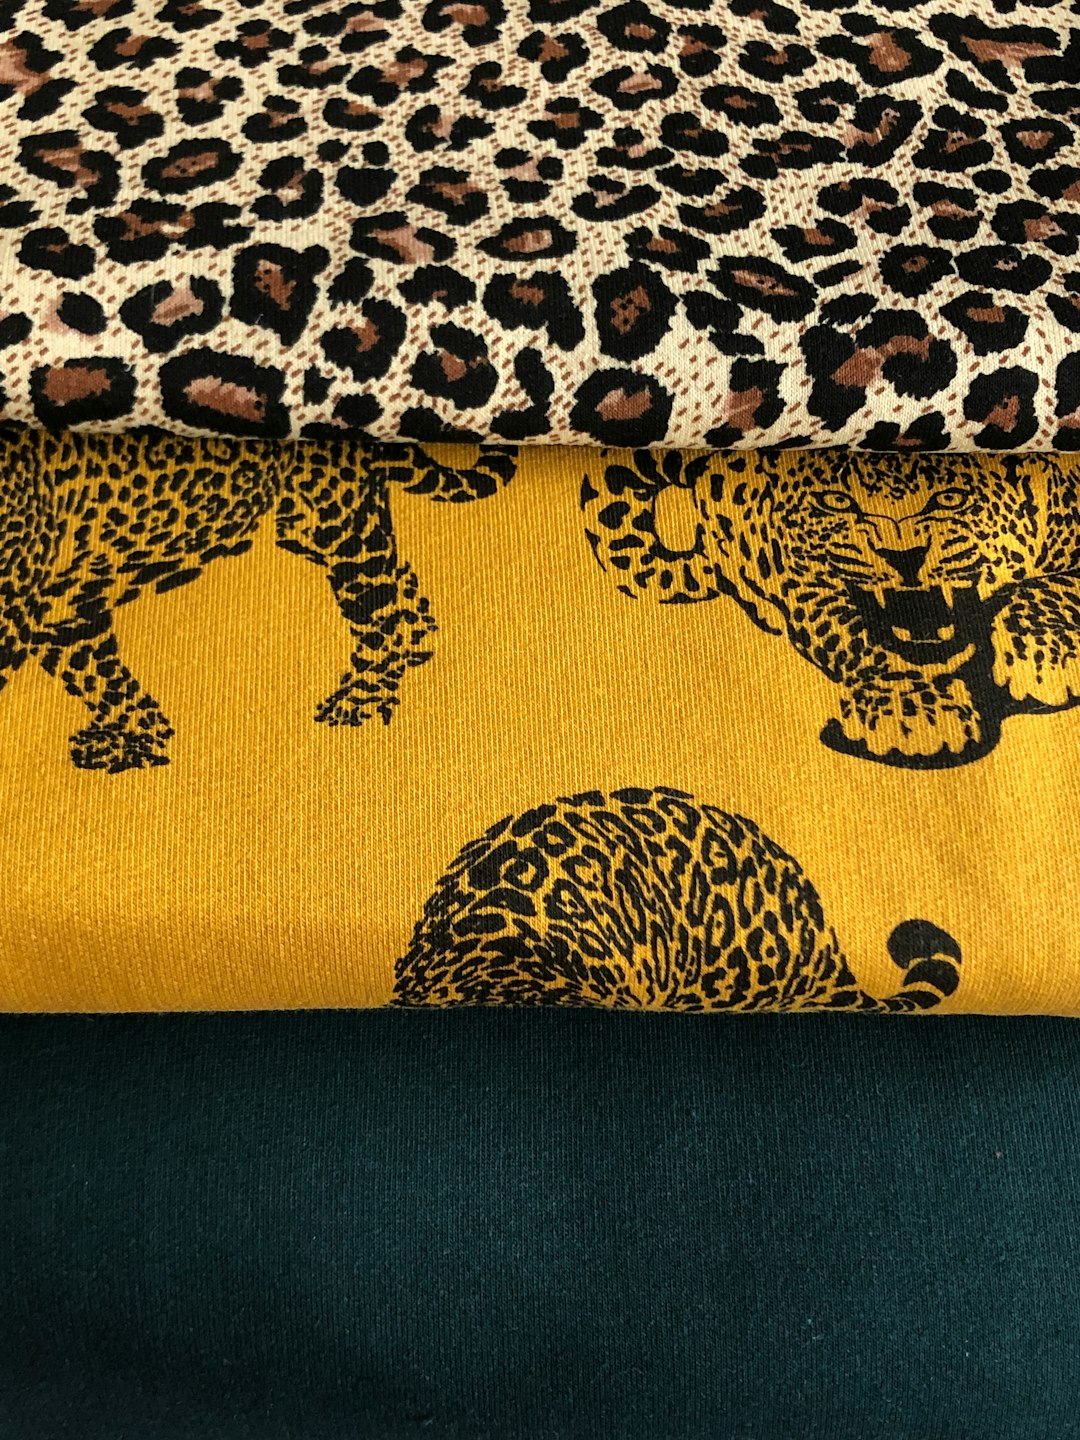 Leopard Print Pictures | Download Free Images on Unsplash